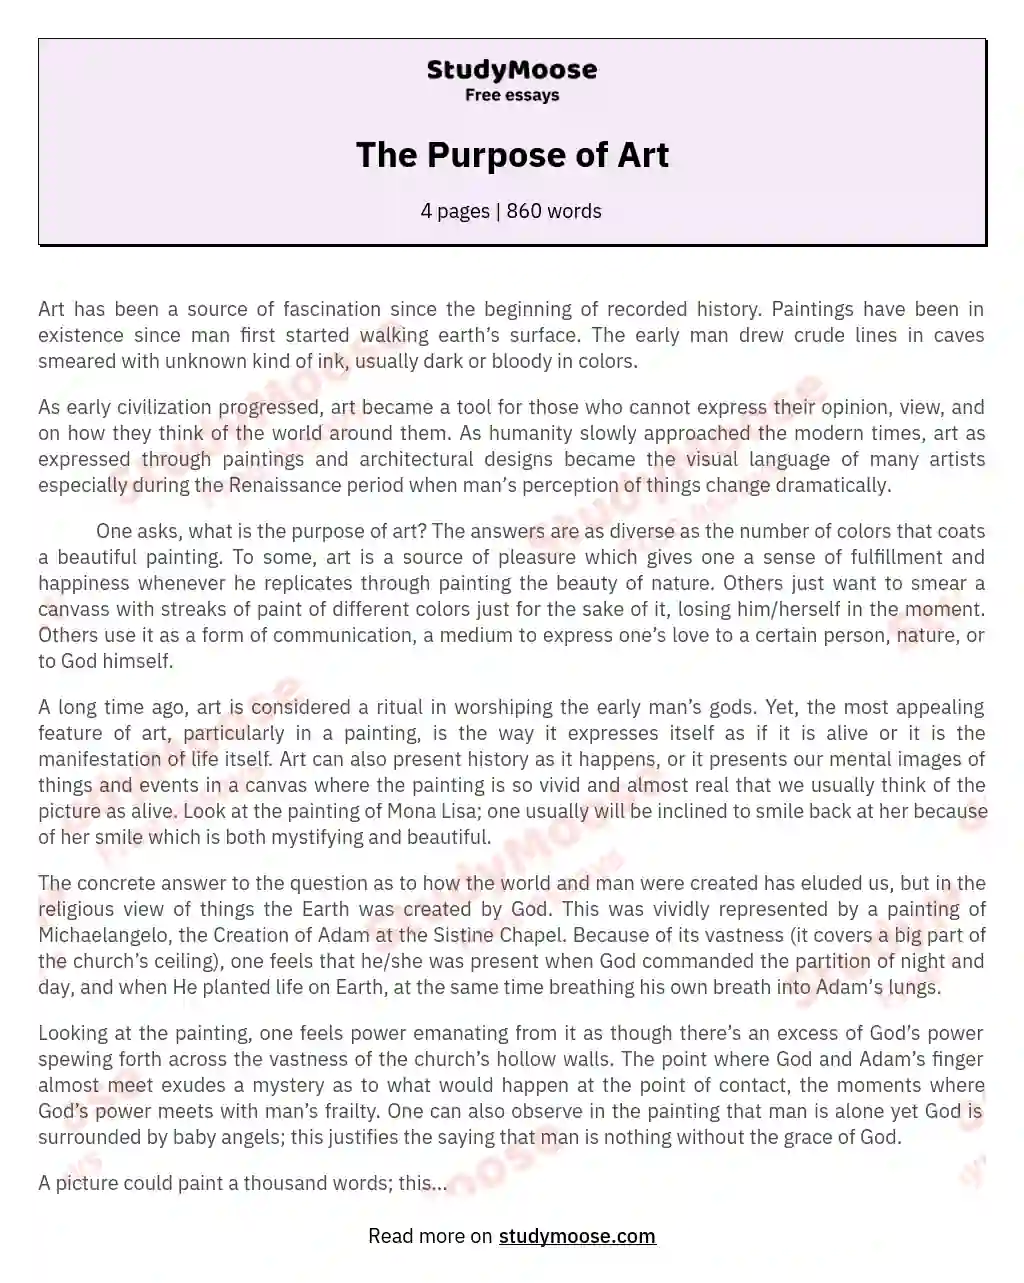 The Purpose of Art essay